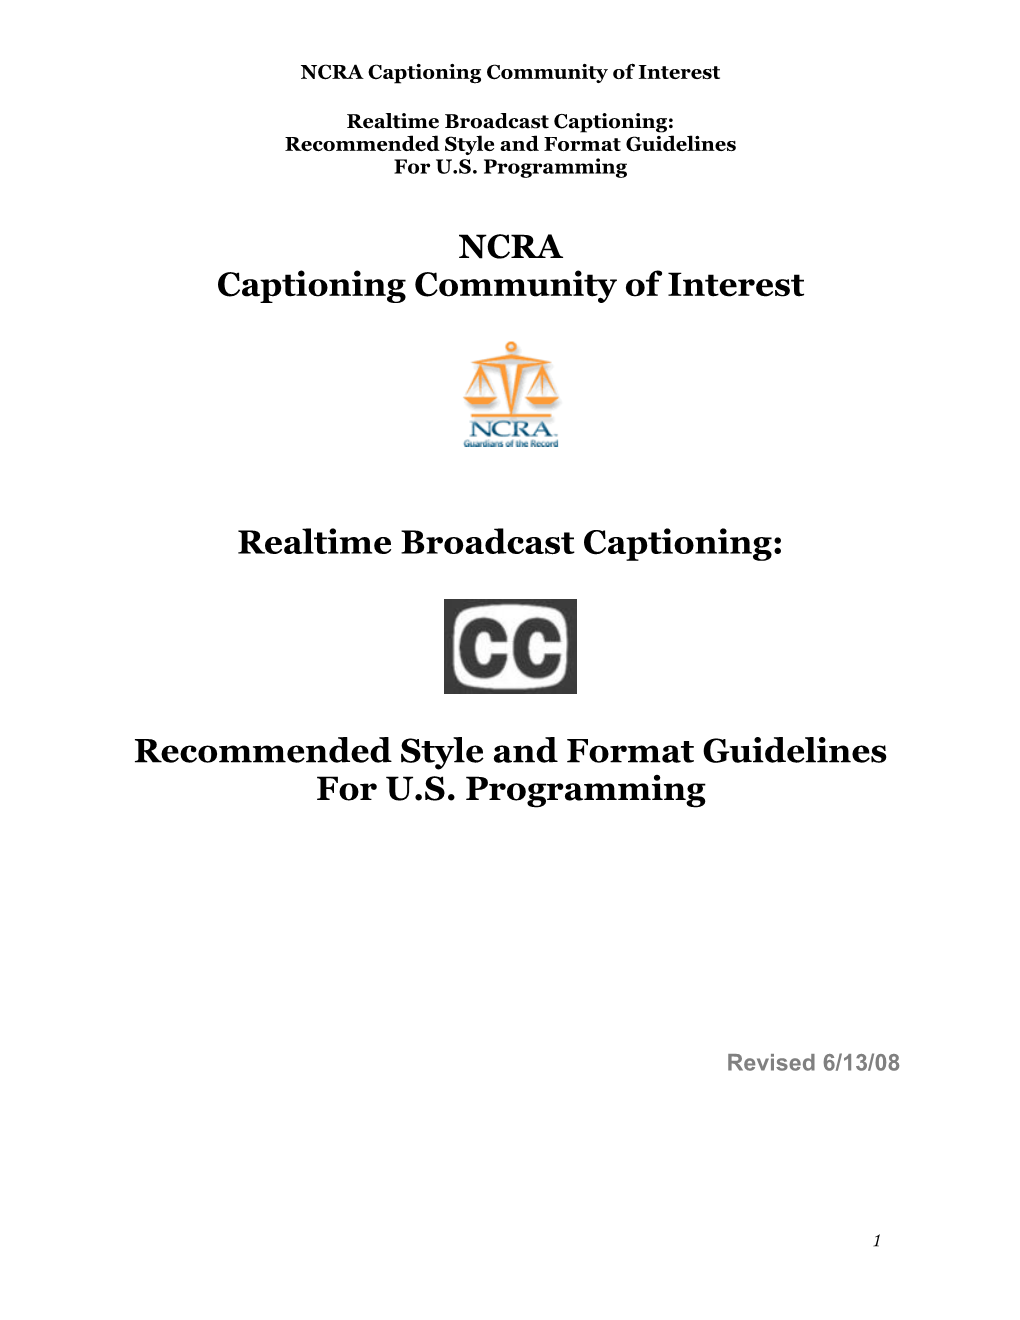 NCRA Captioning Community of Interest Realtime Broadcast